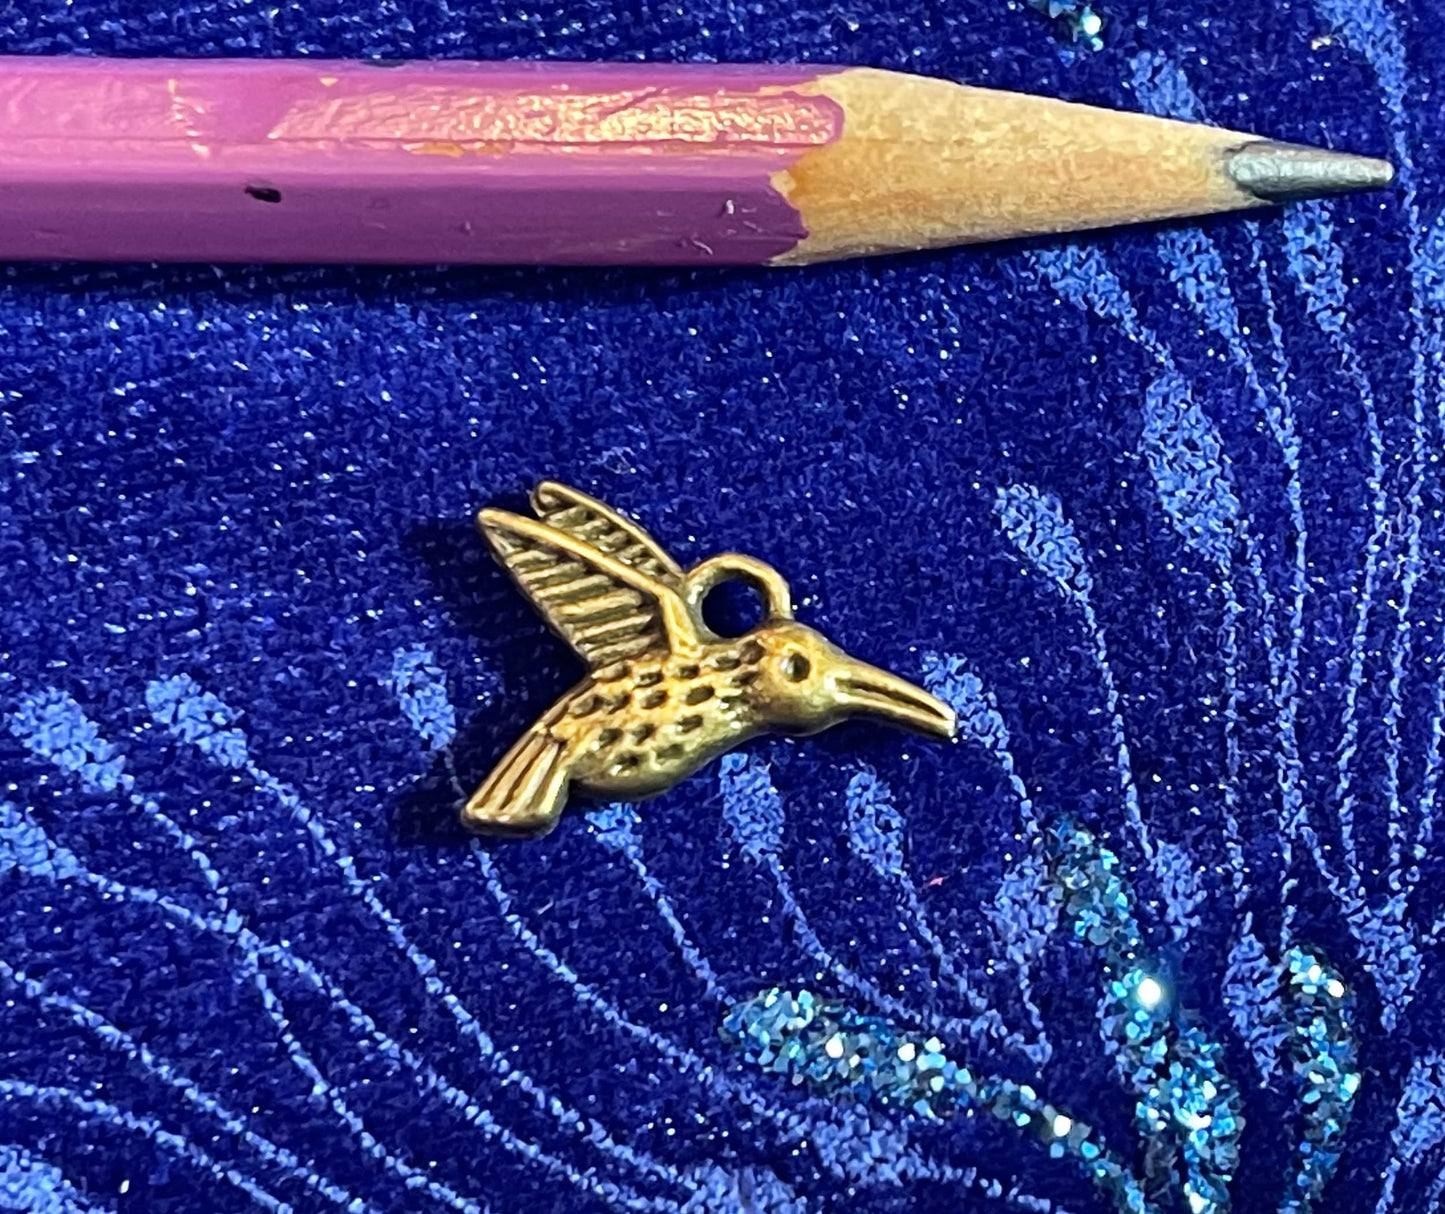 Antique brass hummingbird charm - 18x14 mm - bird in flight - bird-watcher gift - pendant - personalized charm bracelet - mother's day gift